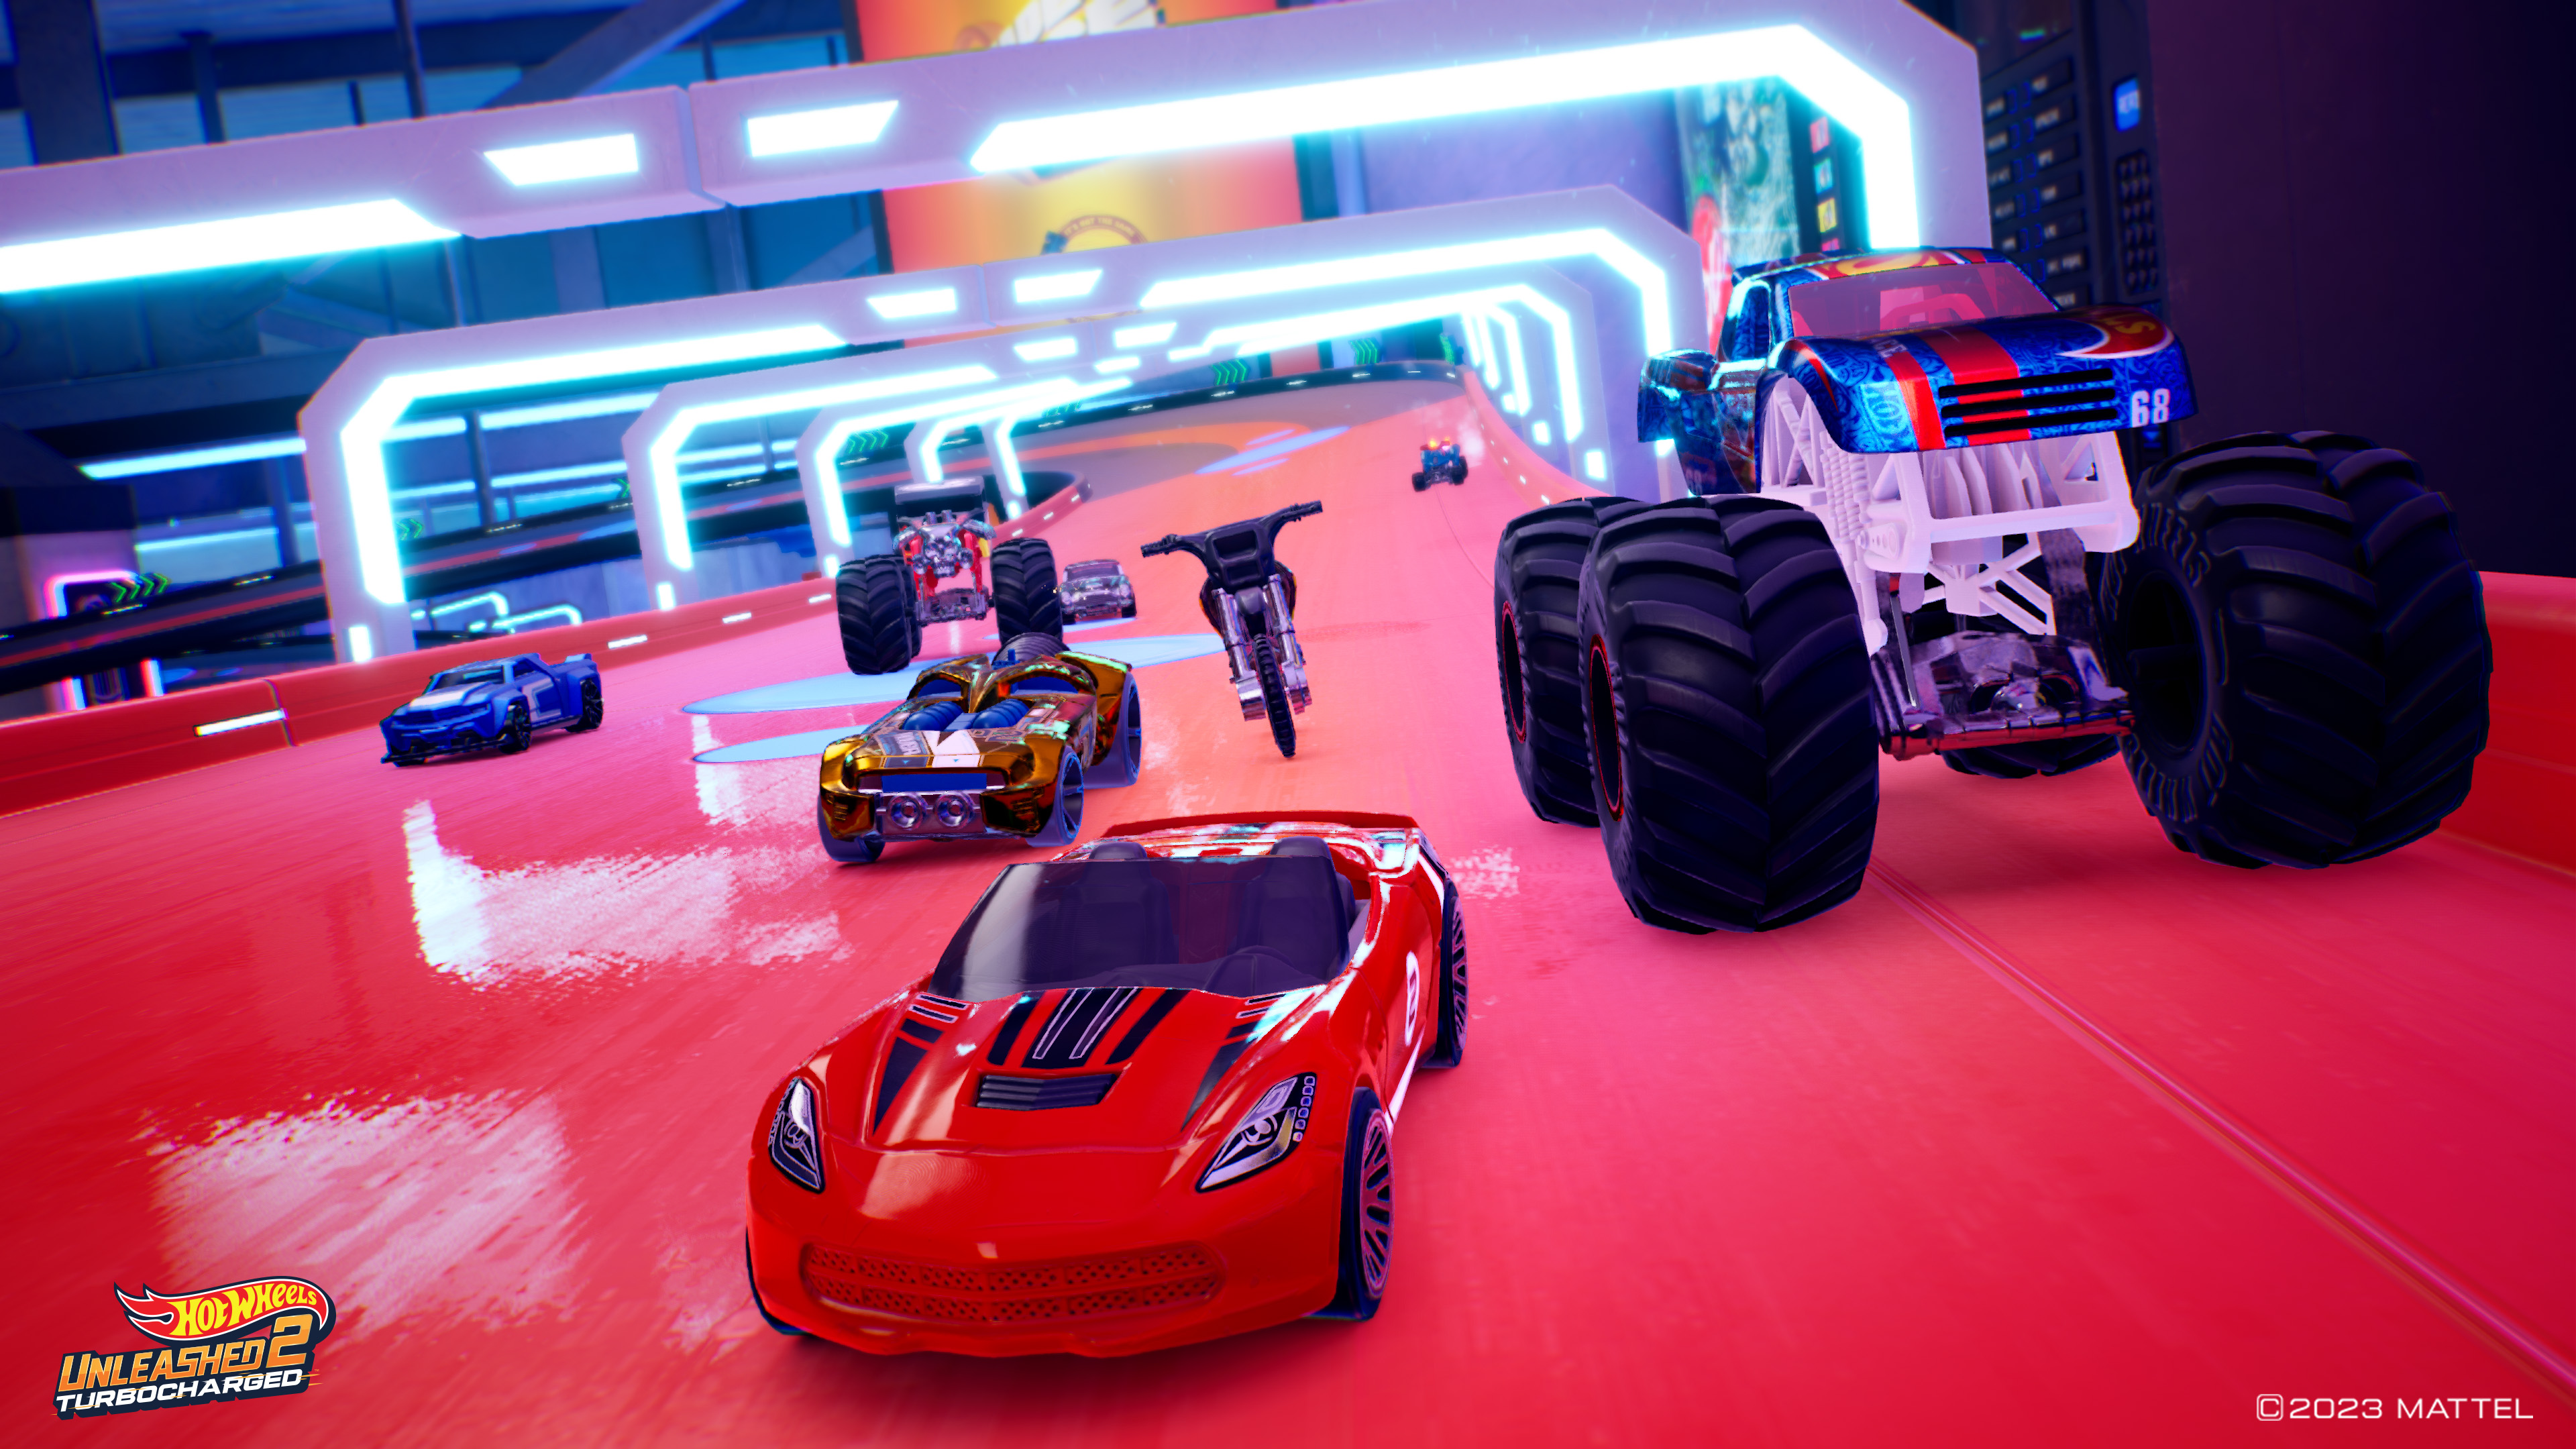 Mattel and Milestone Celebrate the Release - Hot Turbocharged Wheels 2 Unleashed of